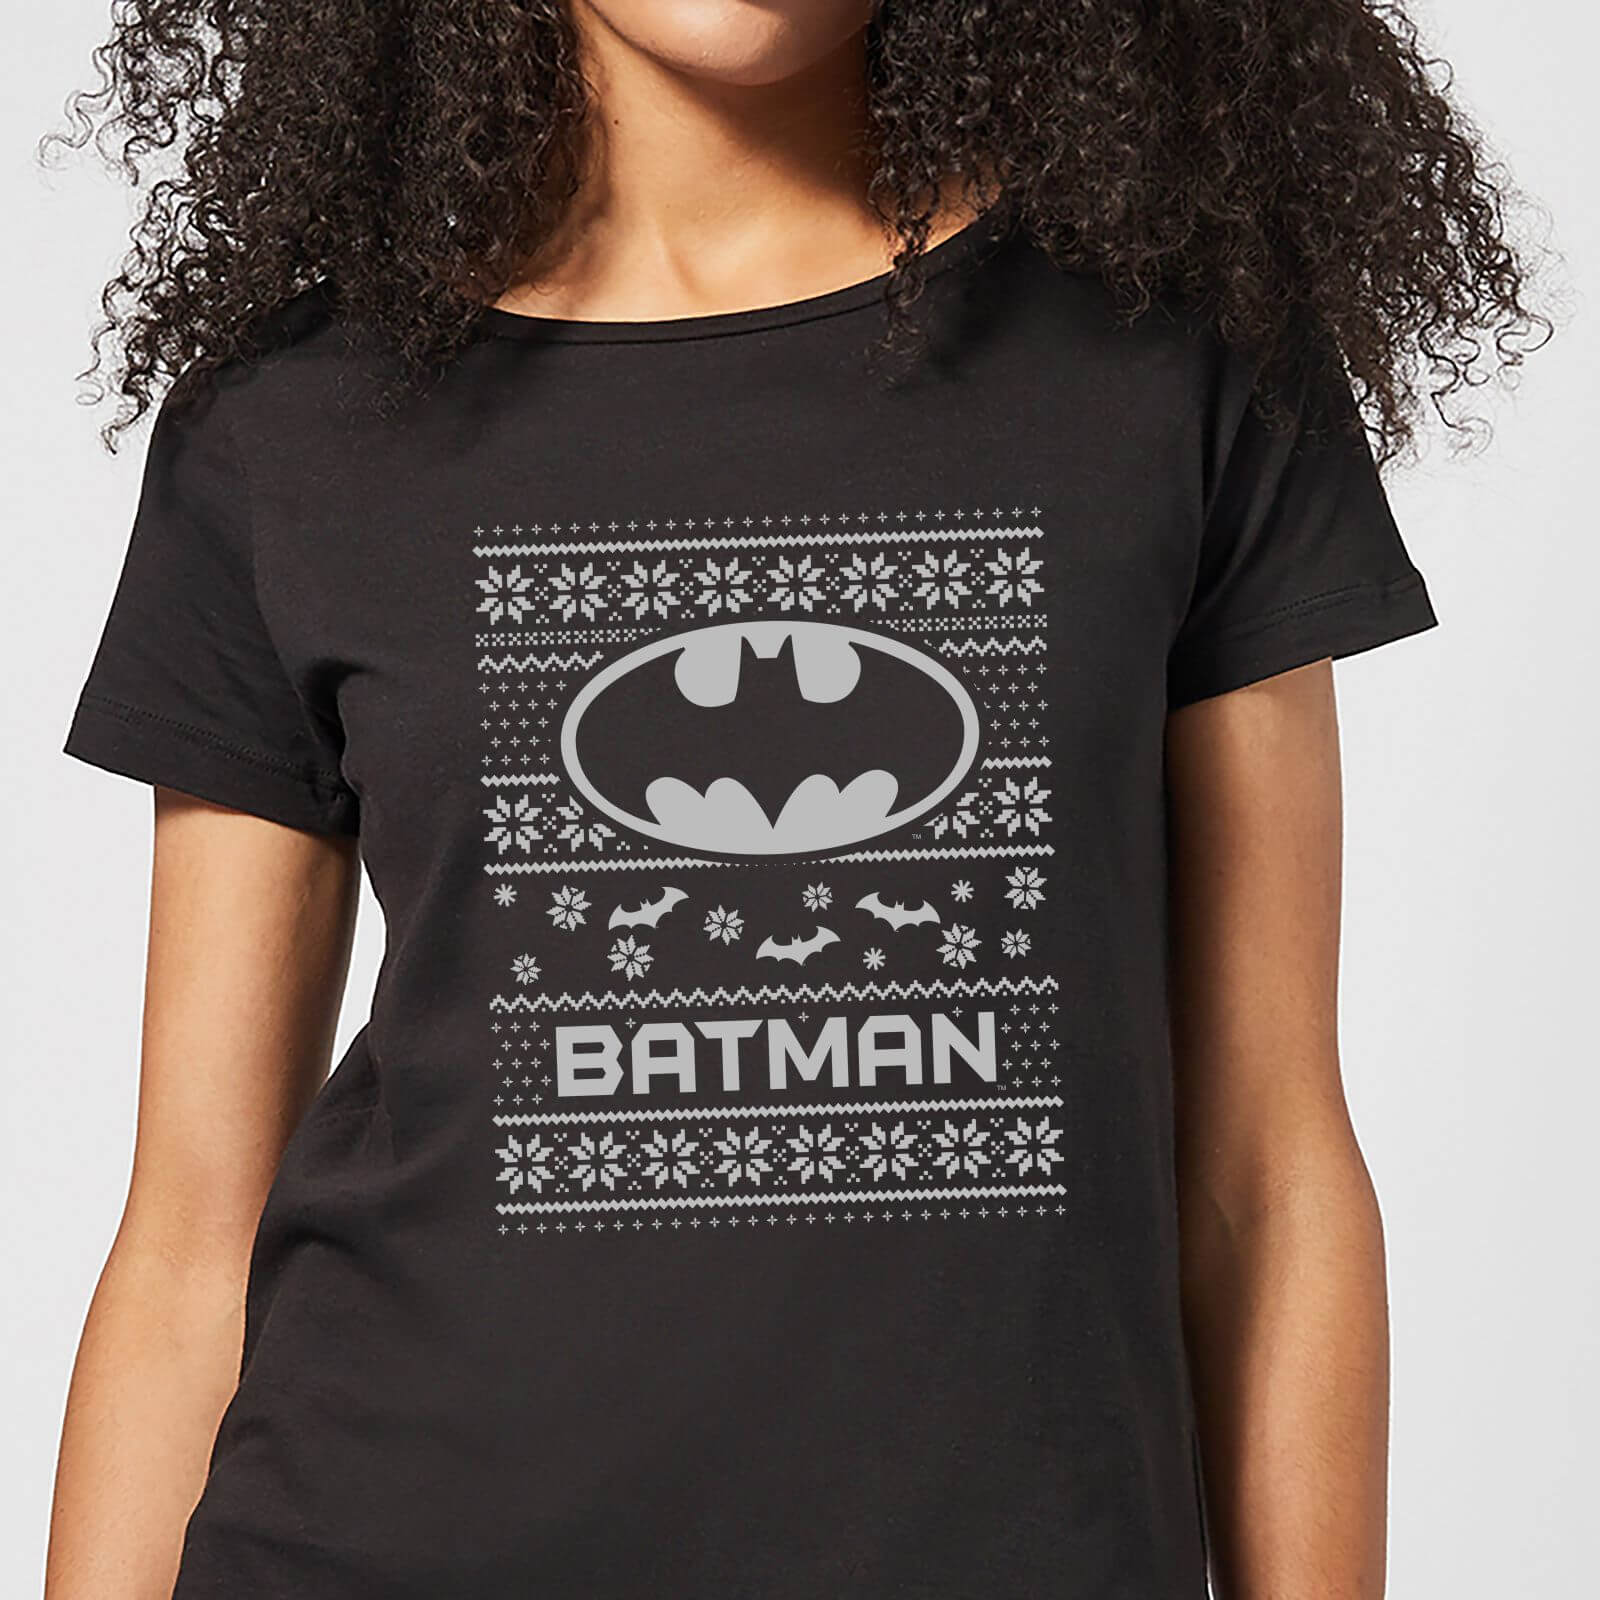 DC Comics Batman Women's Christmas T-Shirt in Black - S - Black